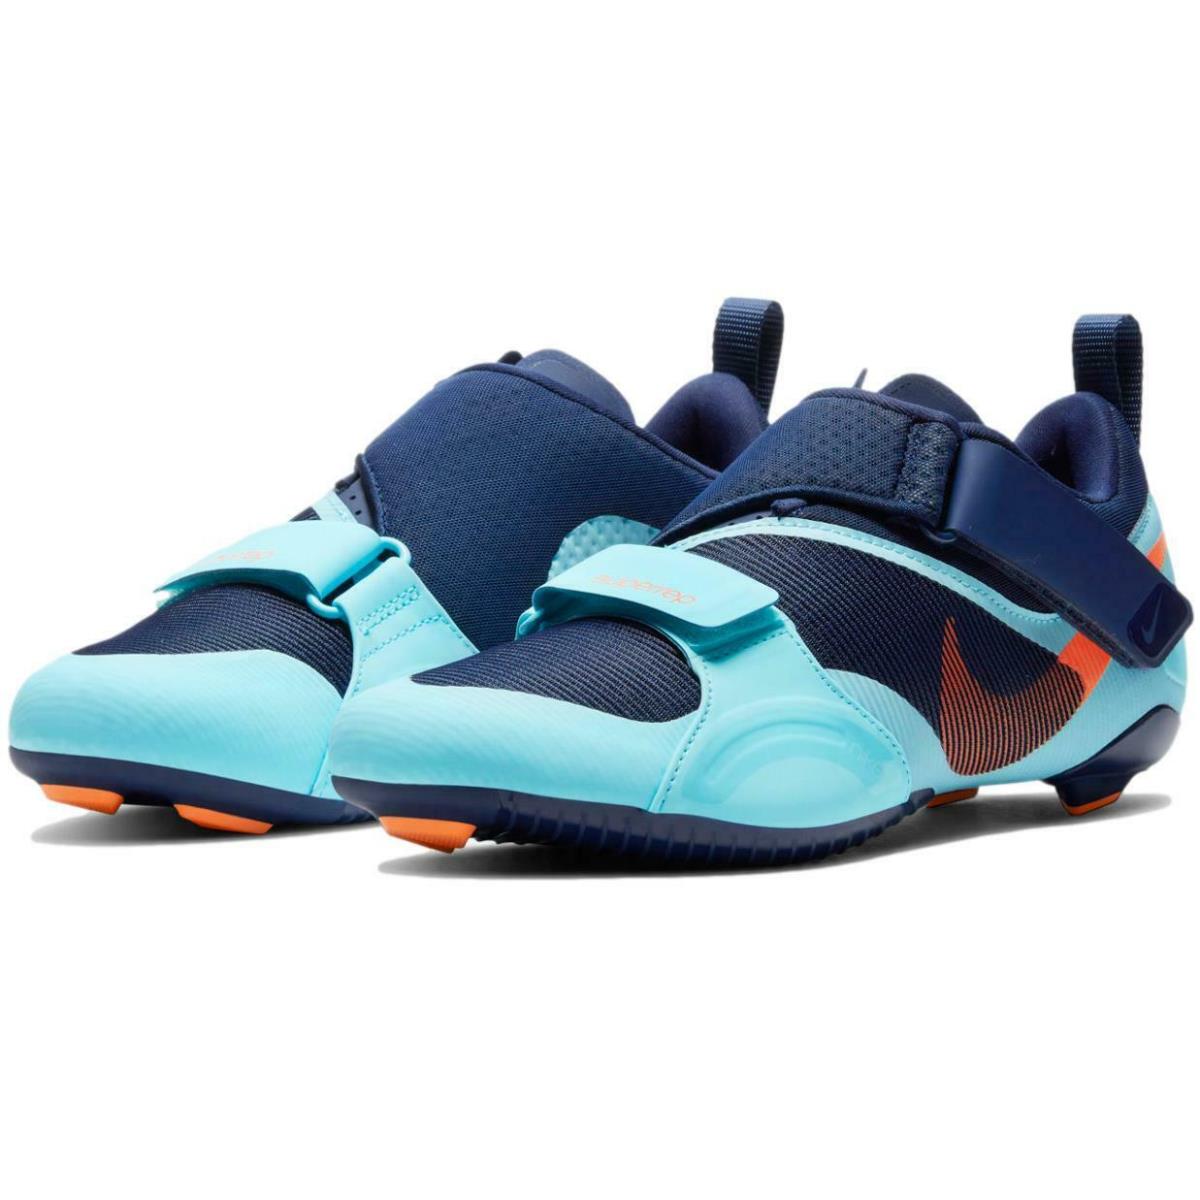 Nike Men`s Superrep Indoor Cycling Shoes `blue Void Copa Orange` CW2191-484 - Blue Void/Total Orange-Copa